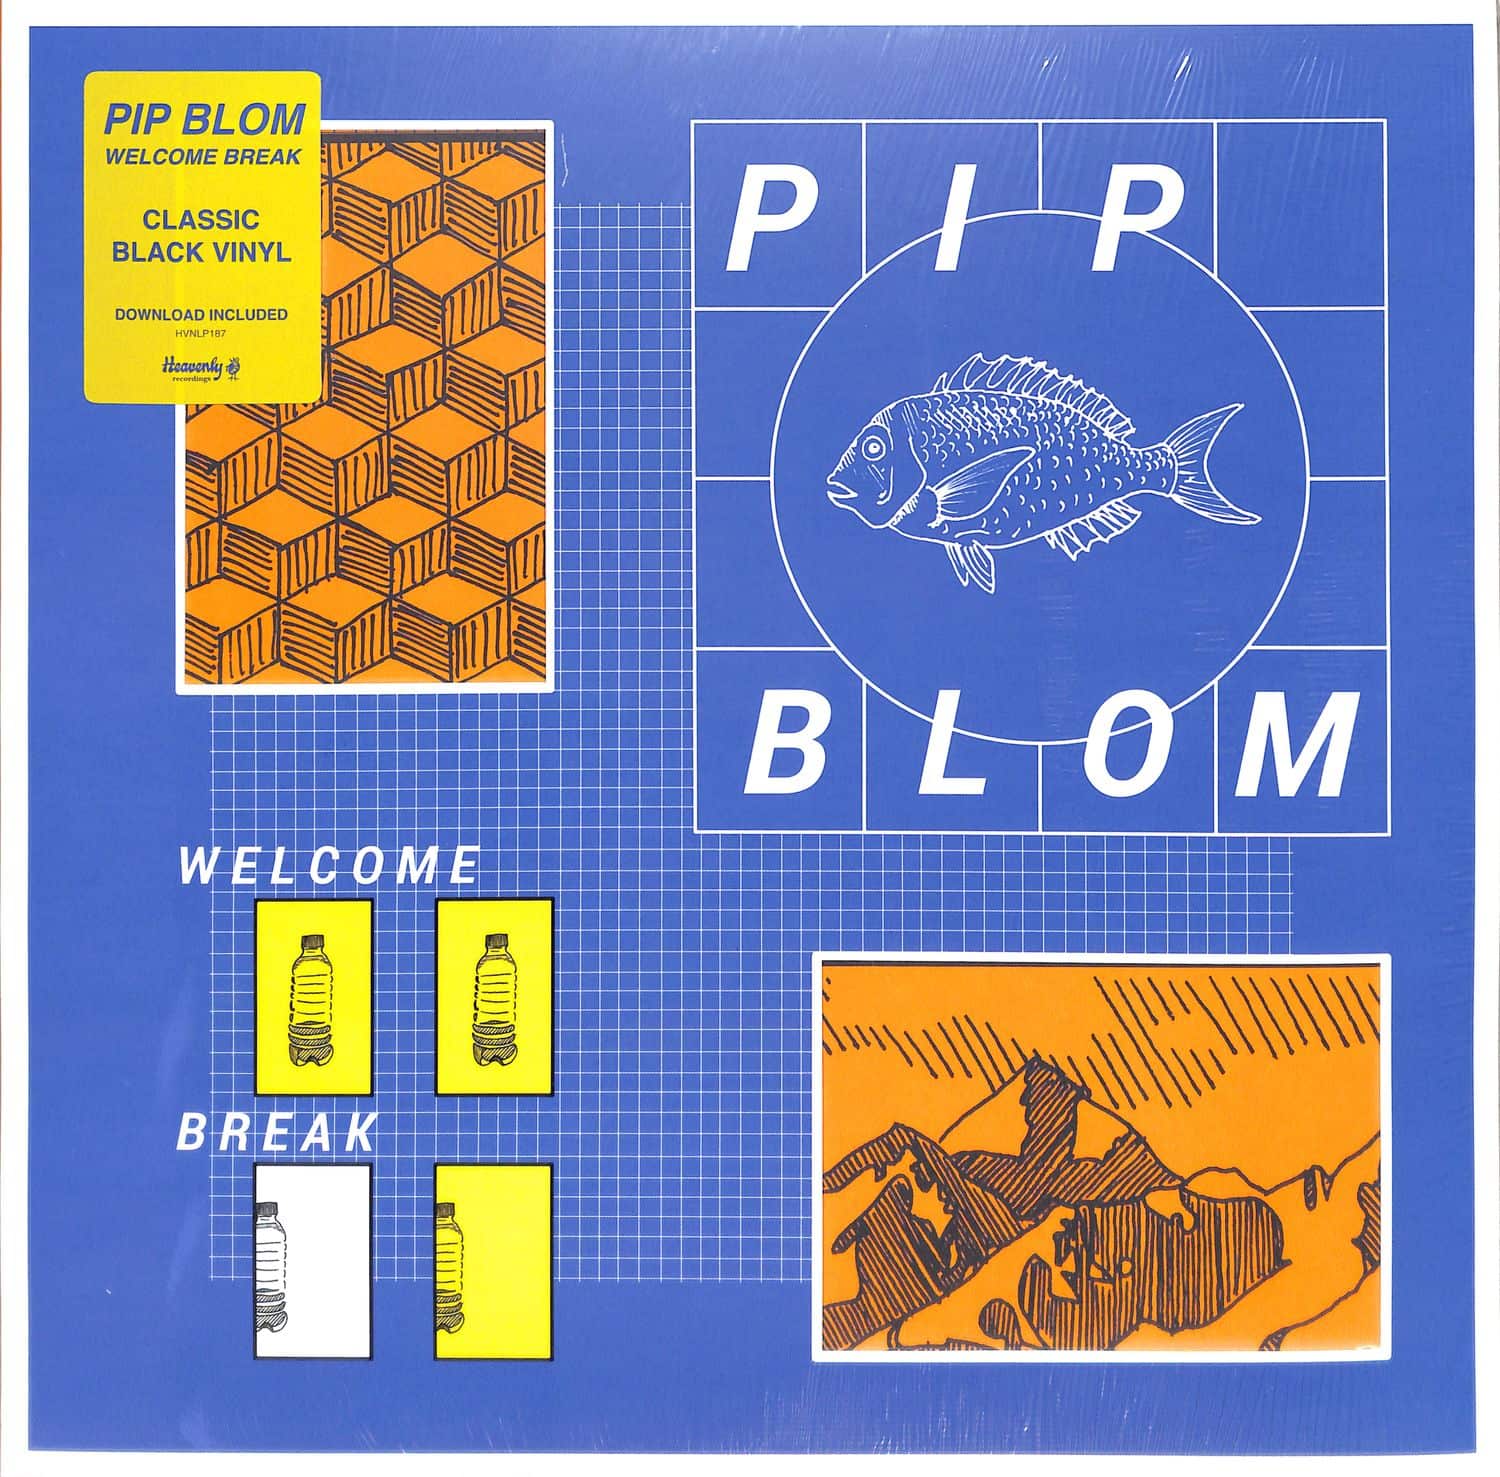 Pip Blom - WELCOME BREAK 